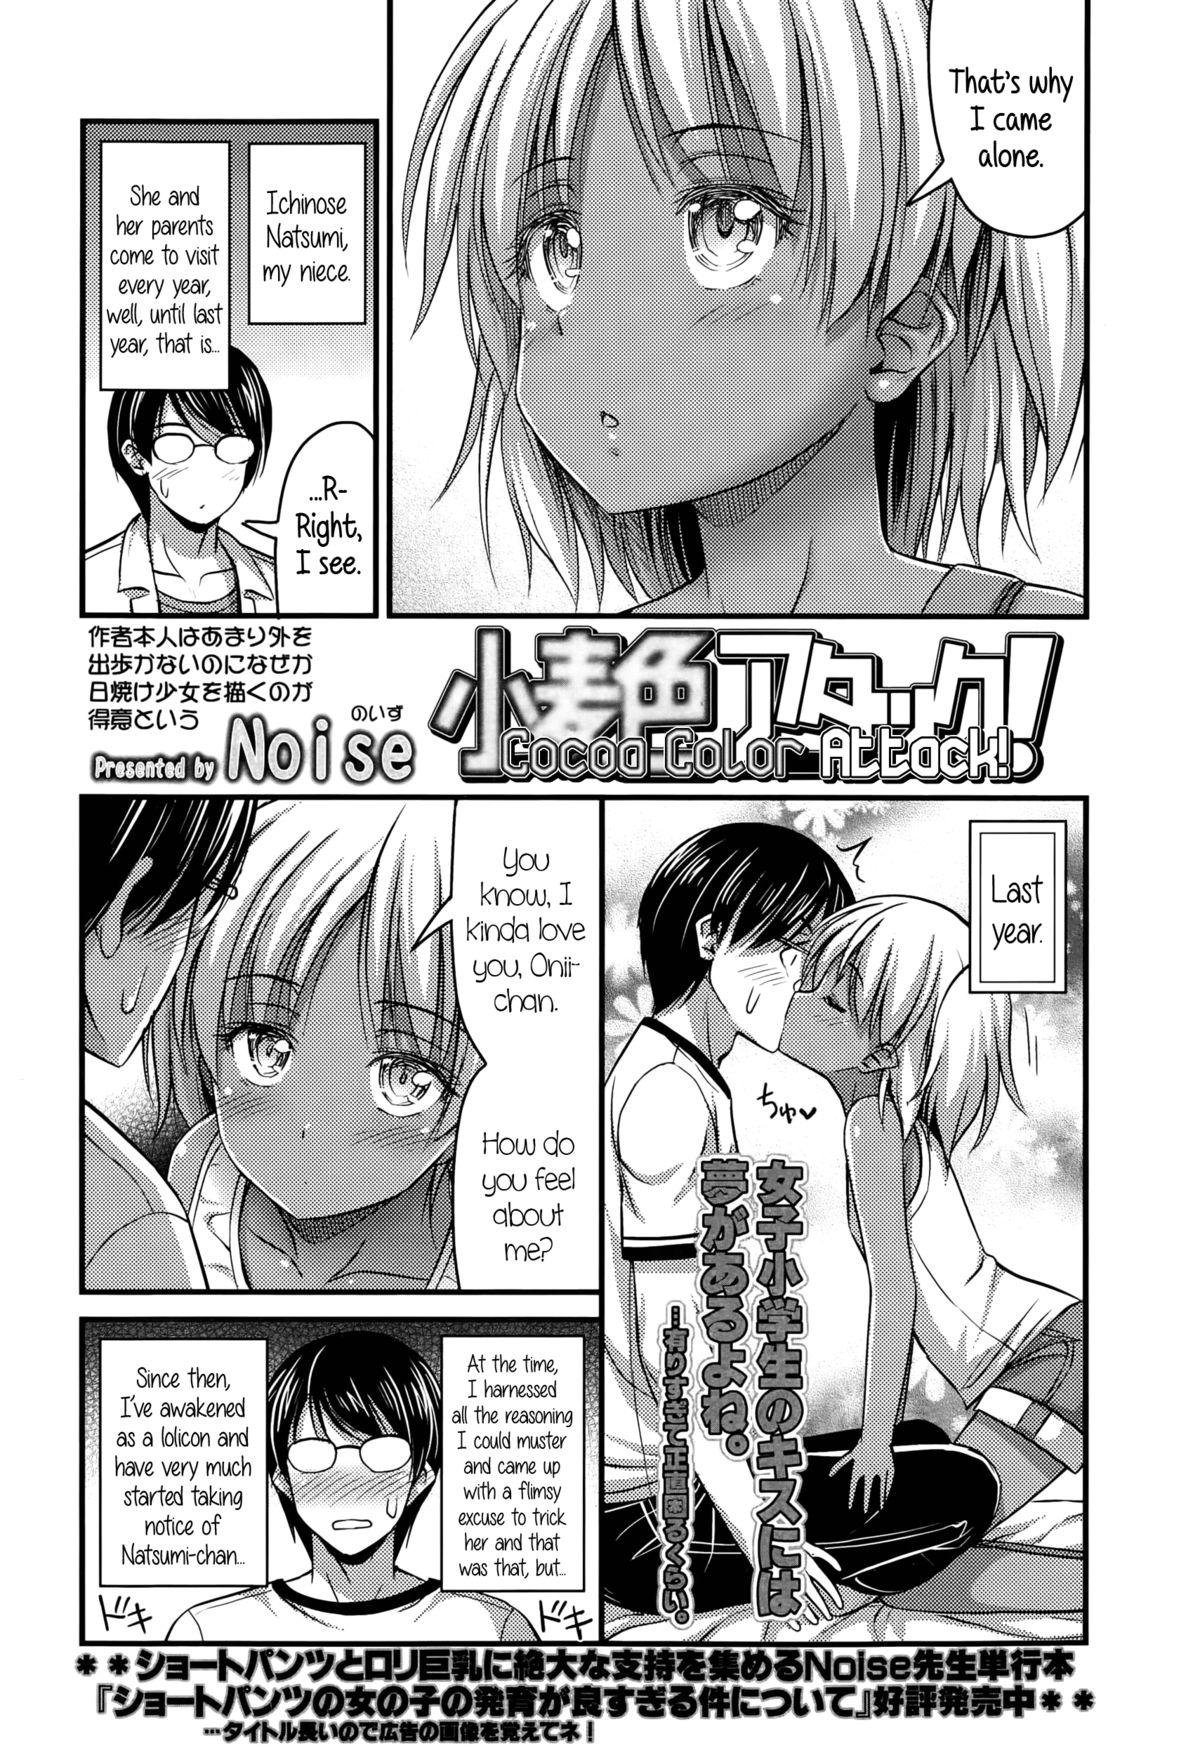 Strange Komugi Iro Attack | Cocoa Color Attack Gang - Page 2